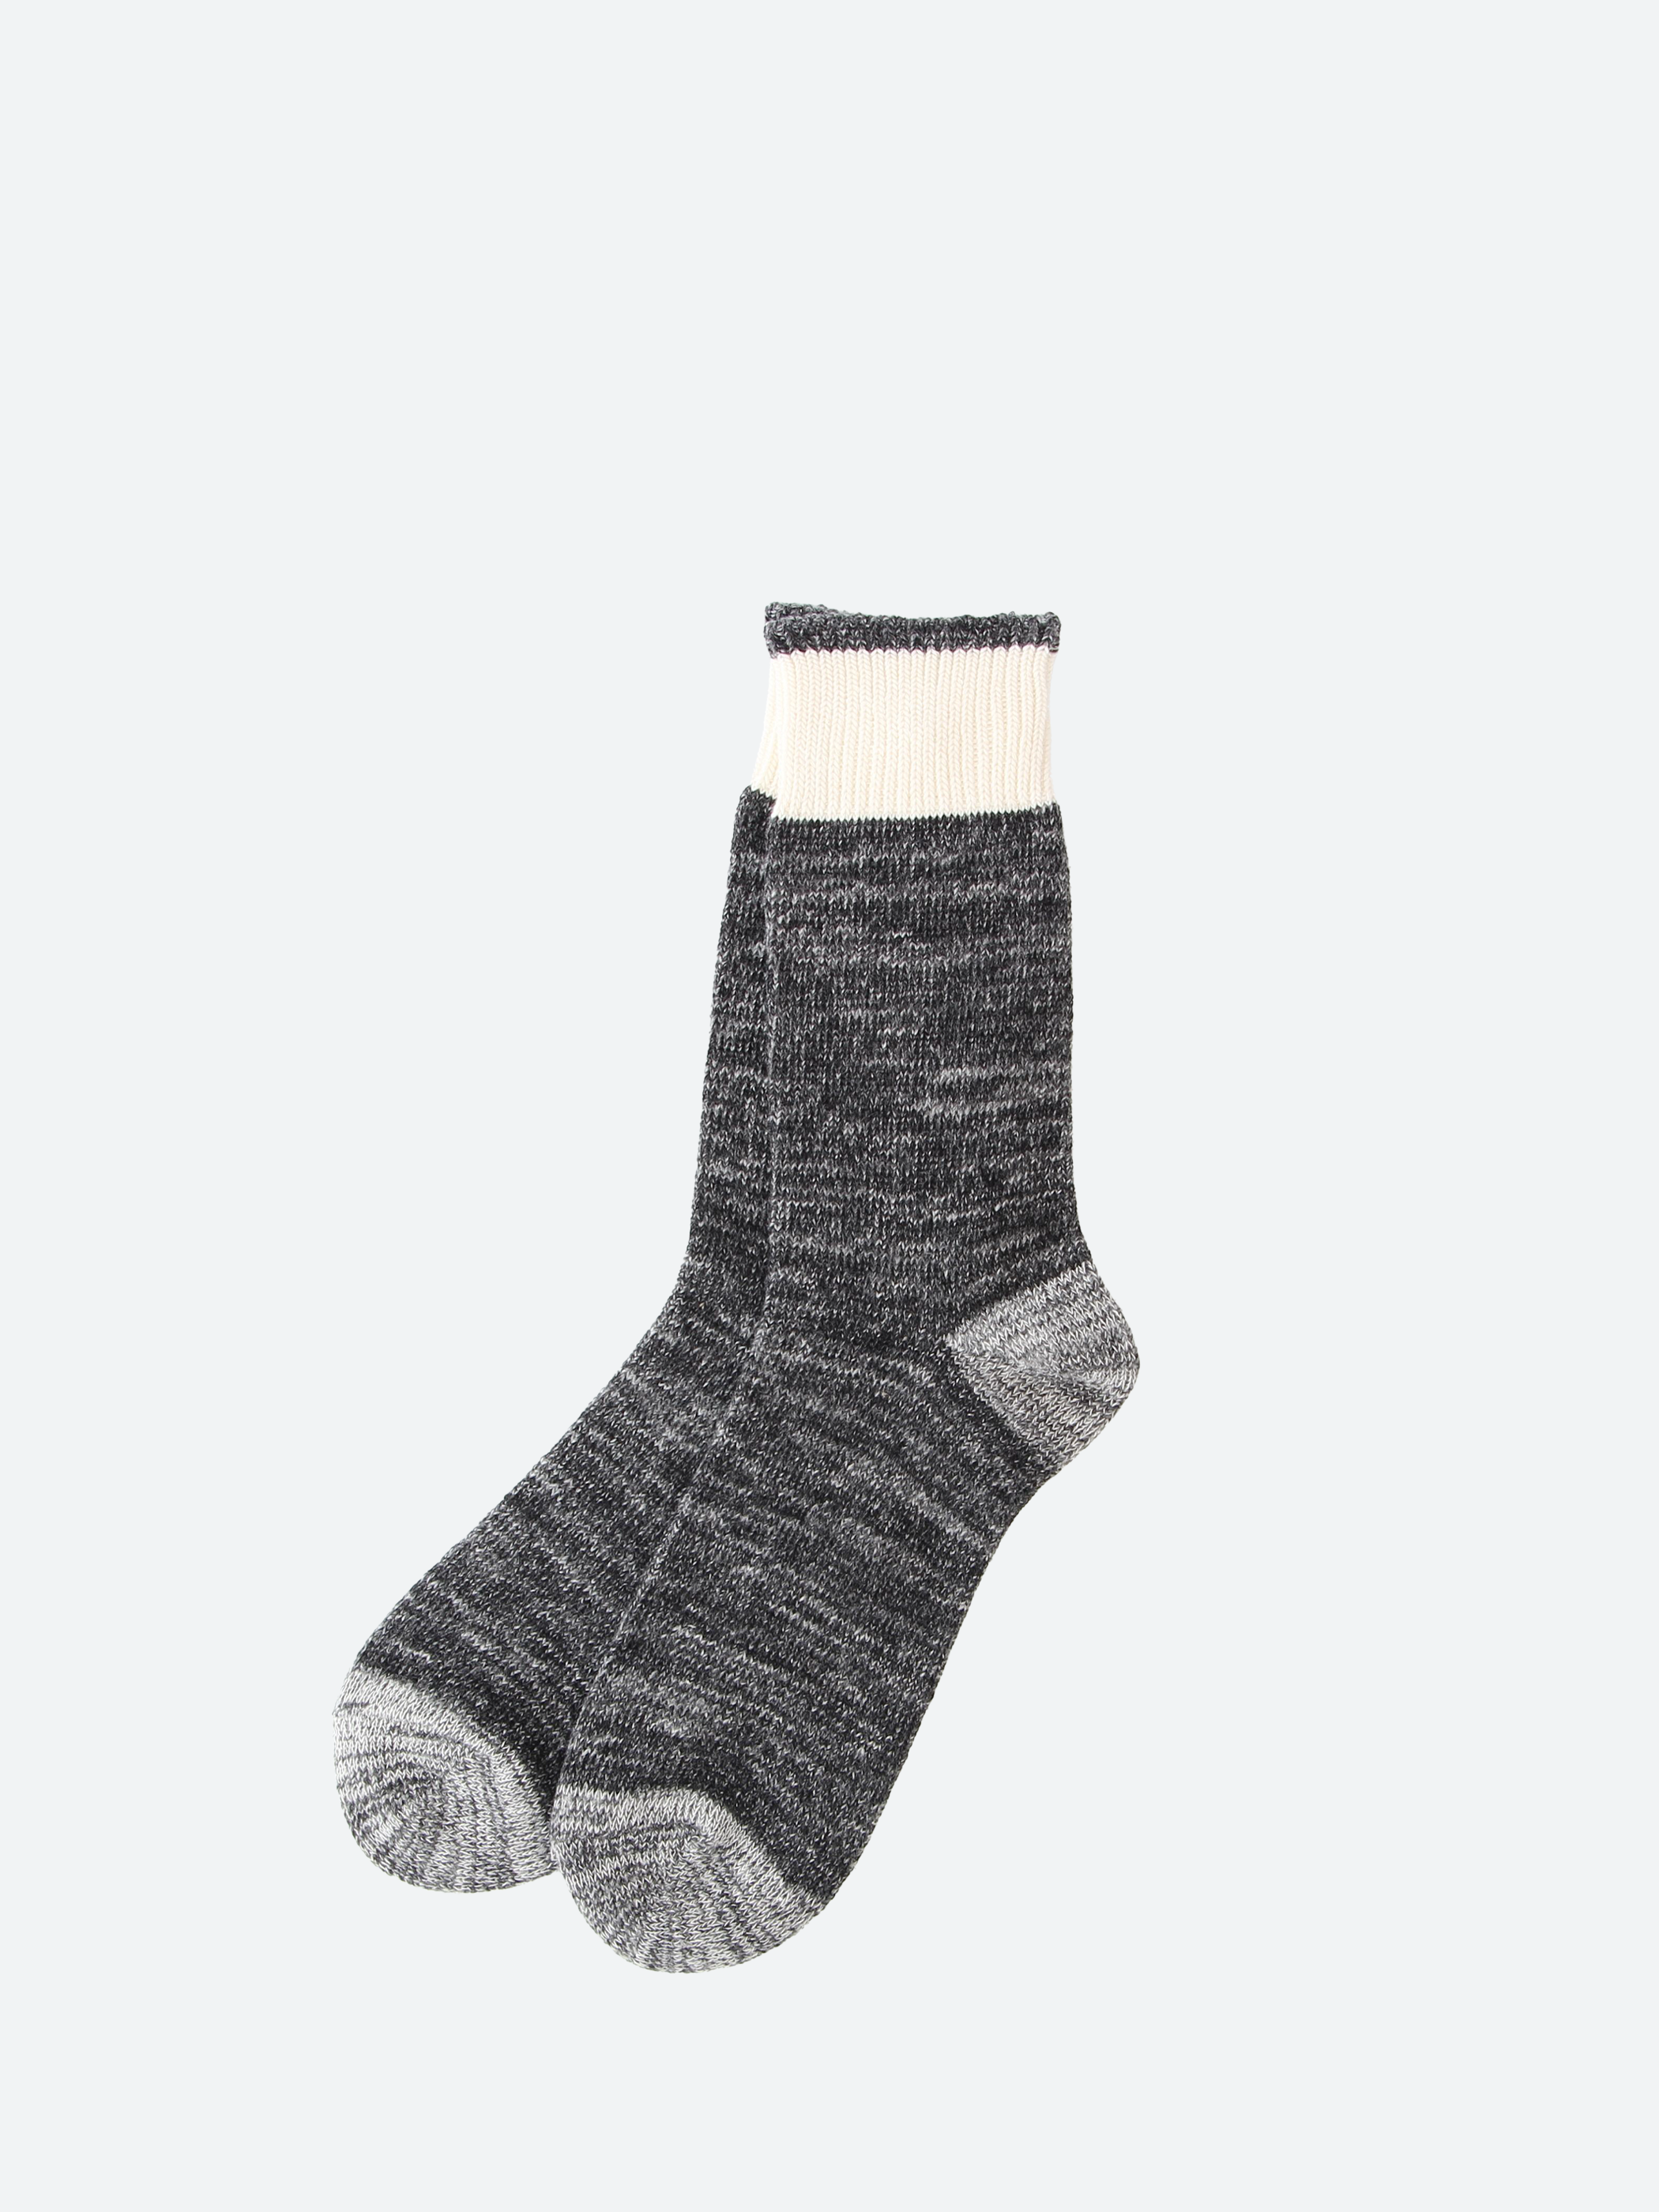 Dustbowl Sock